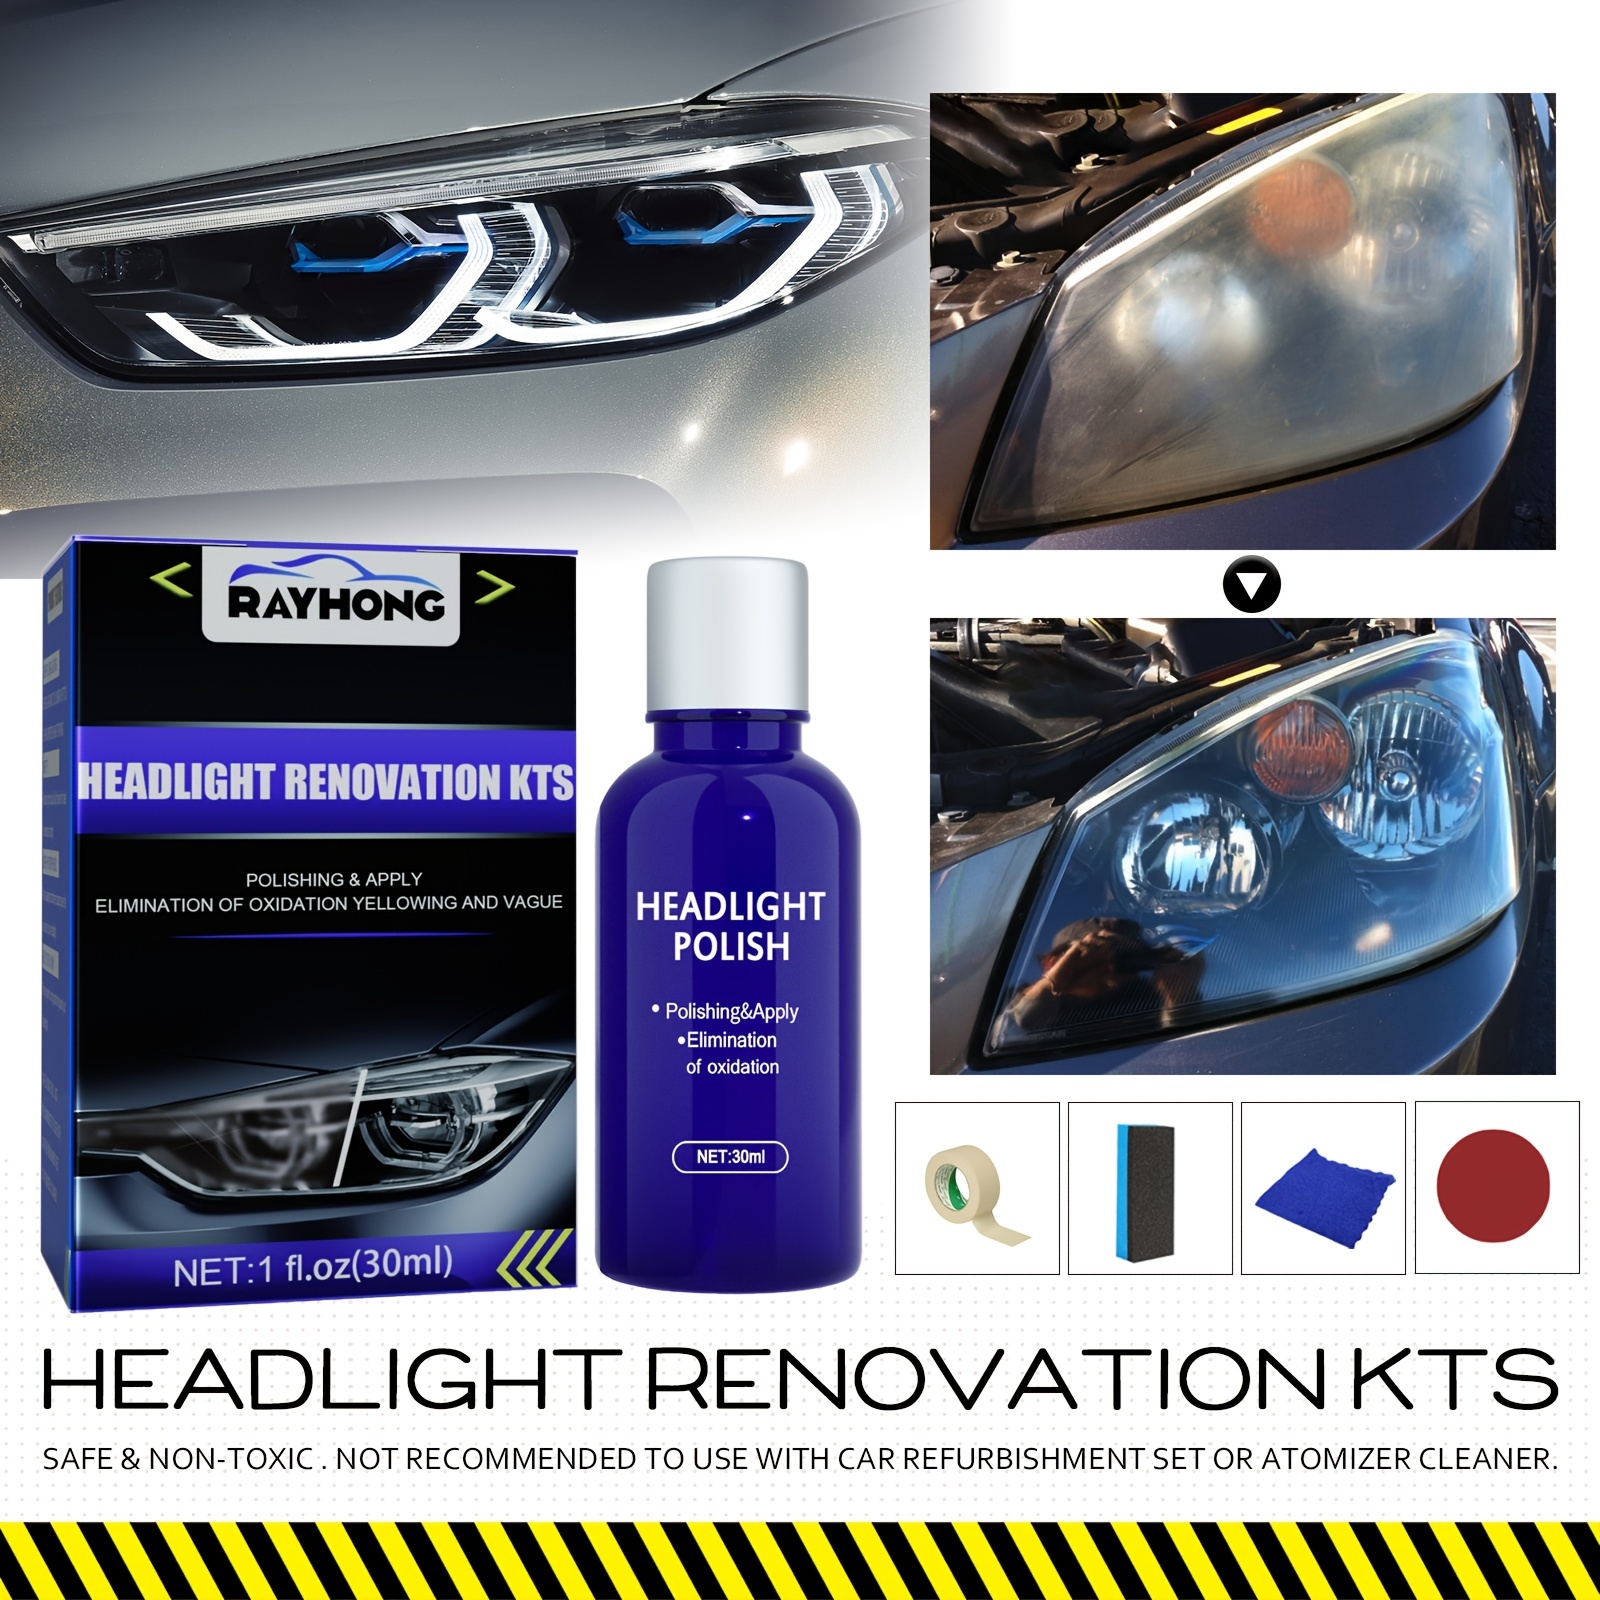  Headlight Repair Polish,Powerful Advance Headlight